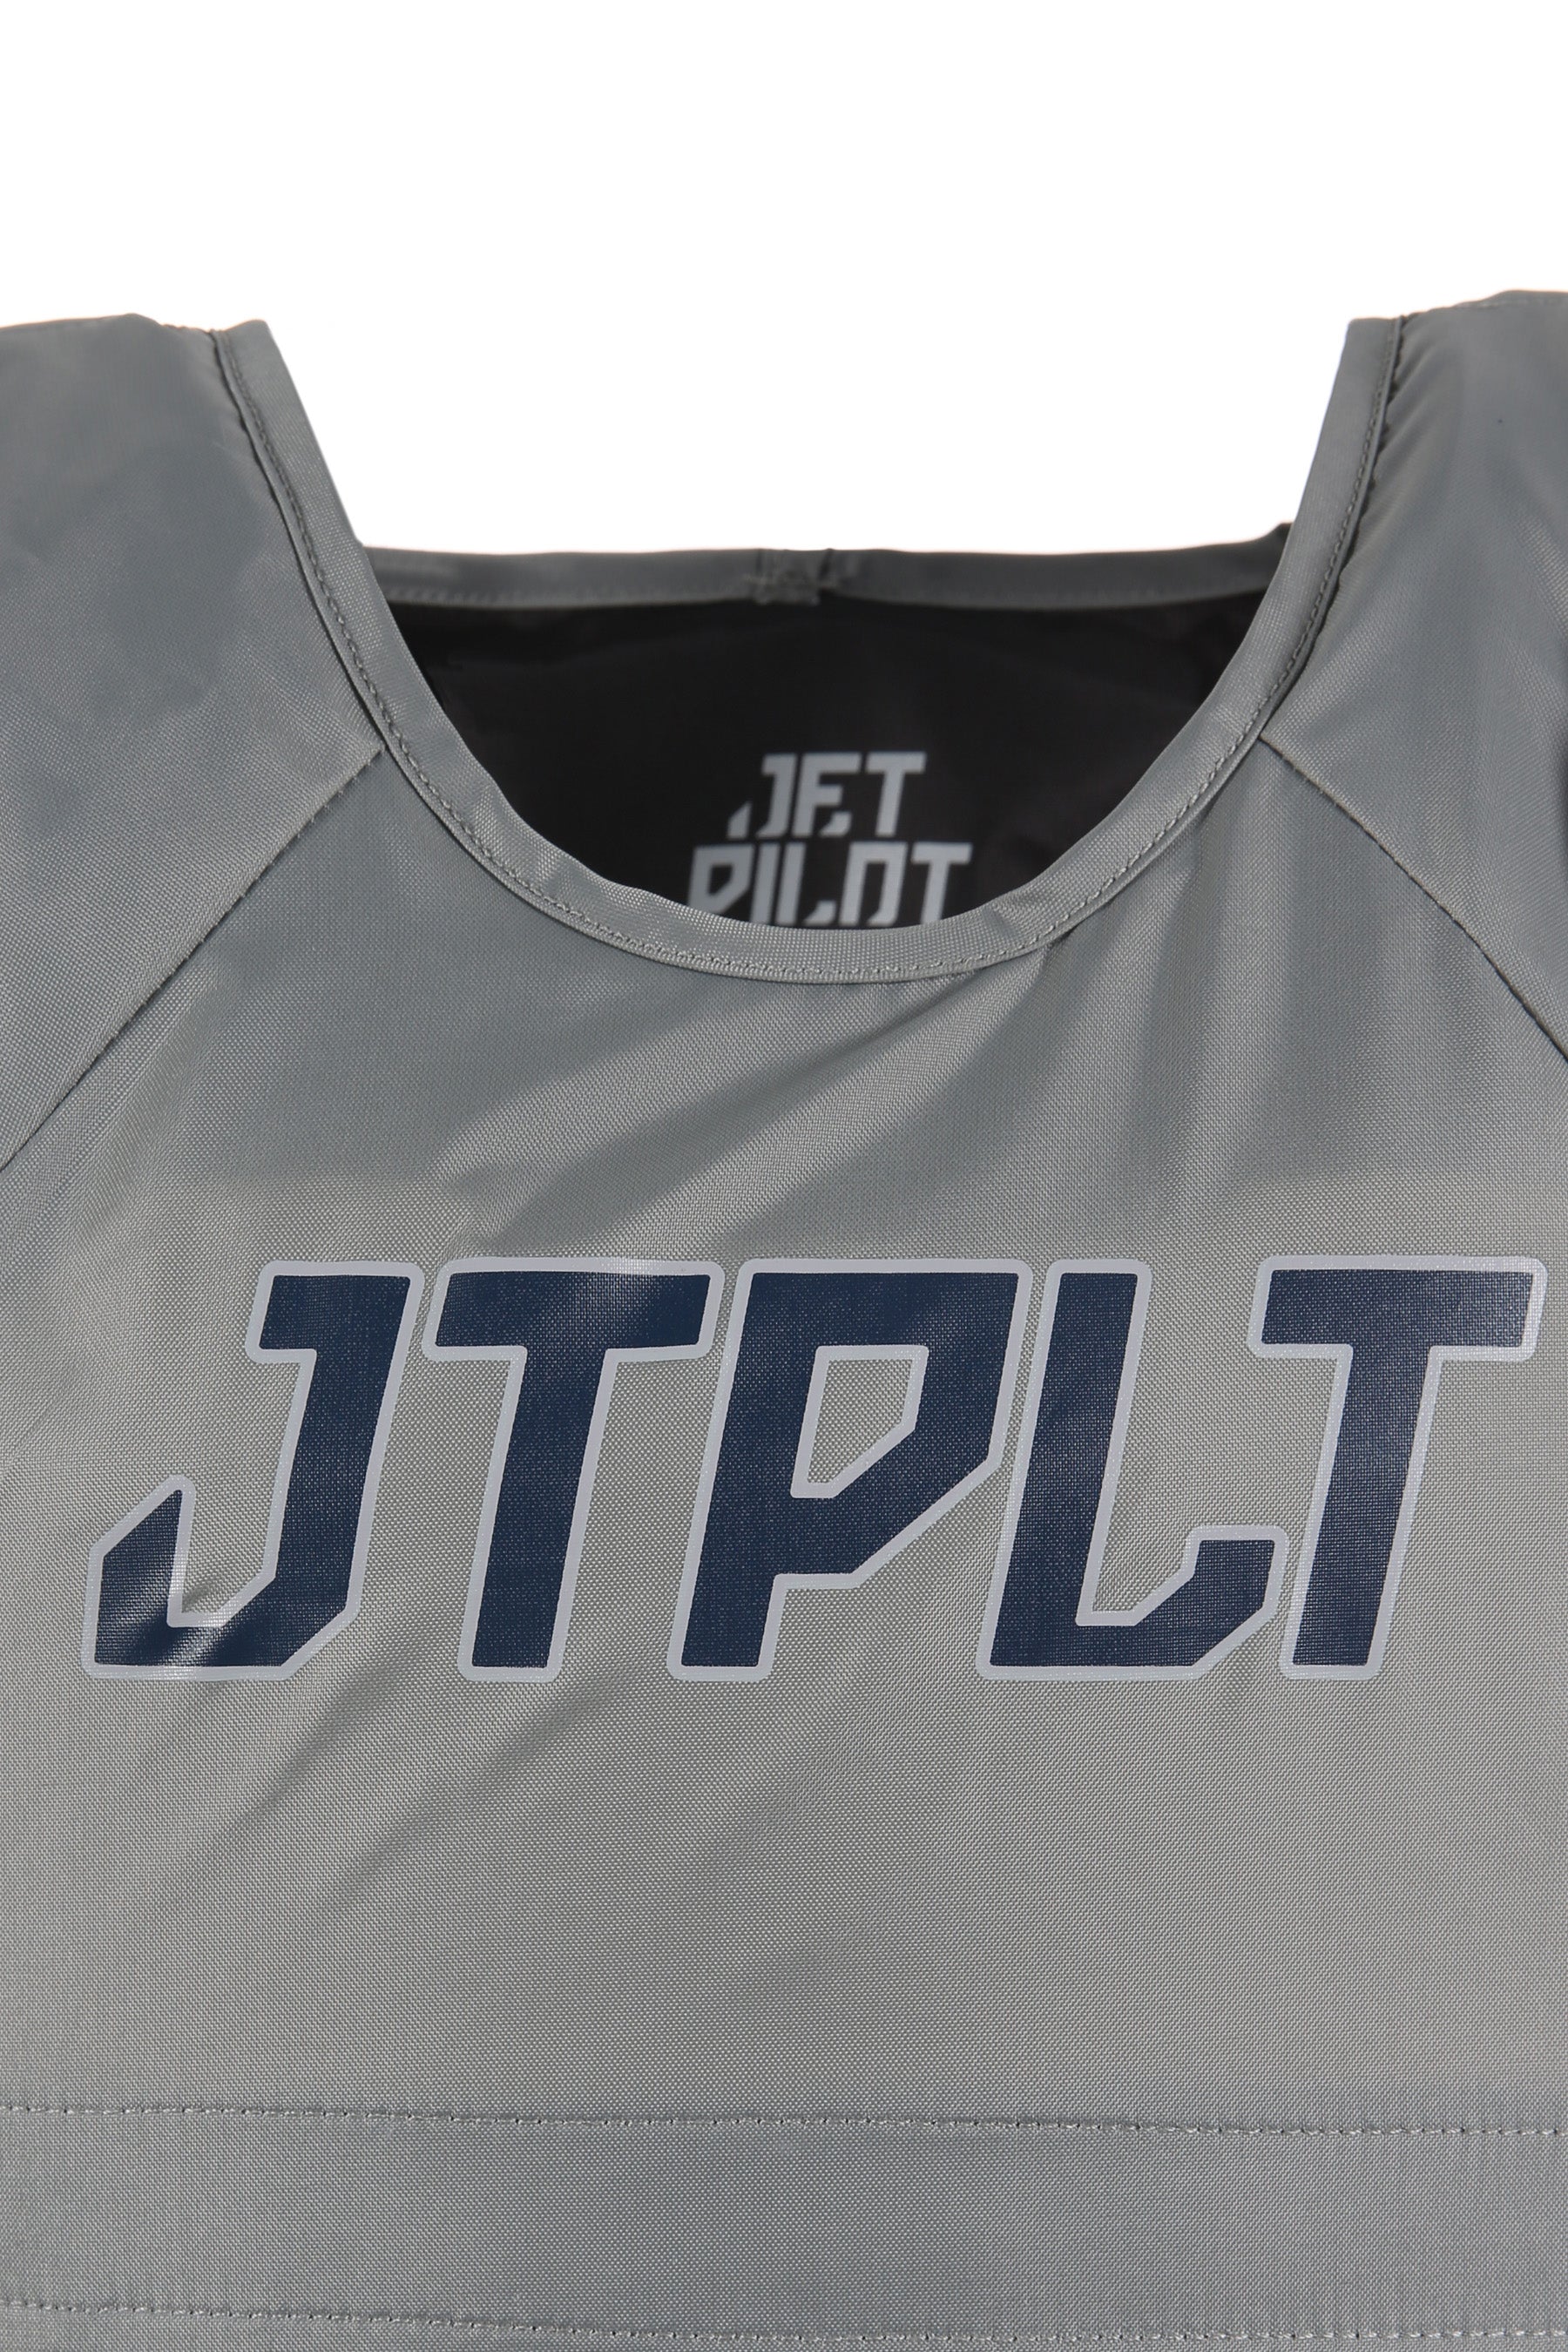 Jetpilot Rx Vault Mens Nylon Life Jacket - Grey 3